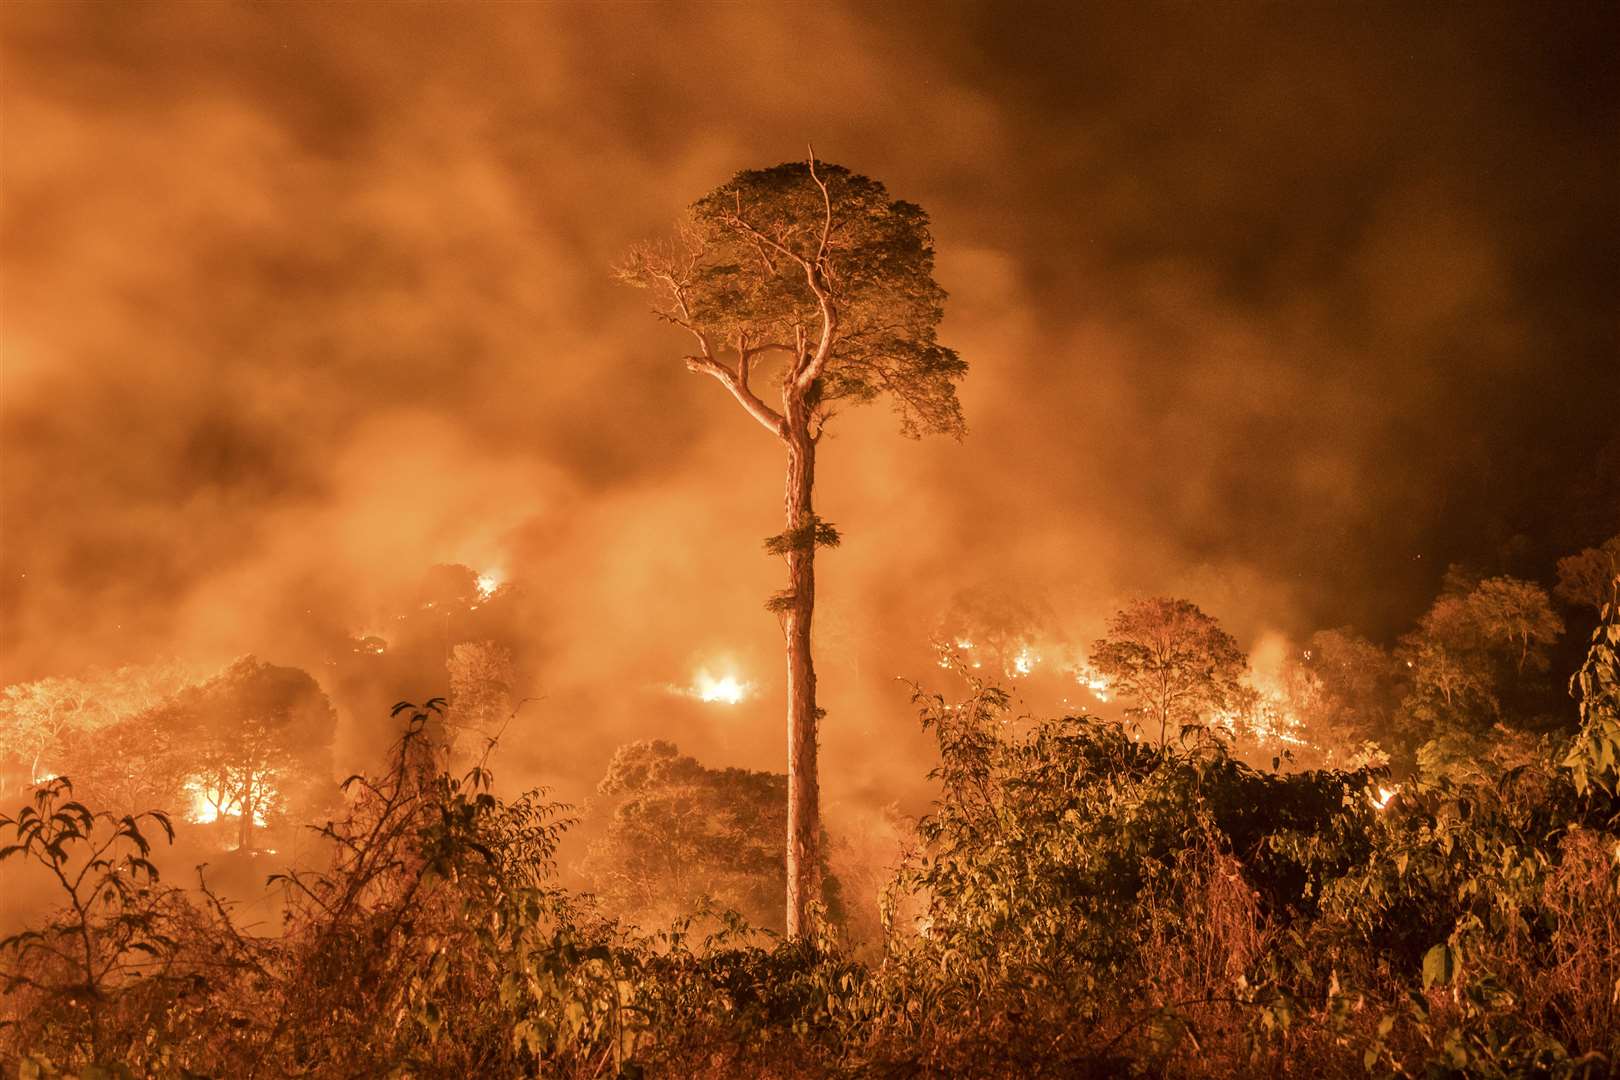 Amazon burning by Charlie Hamilton James (Charlie Hamilton James/Wildlife Photographer of the Year)